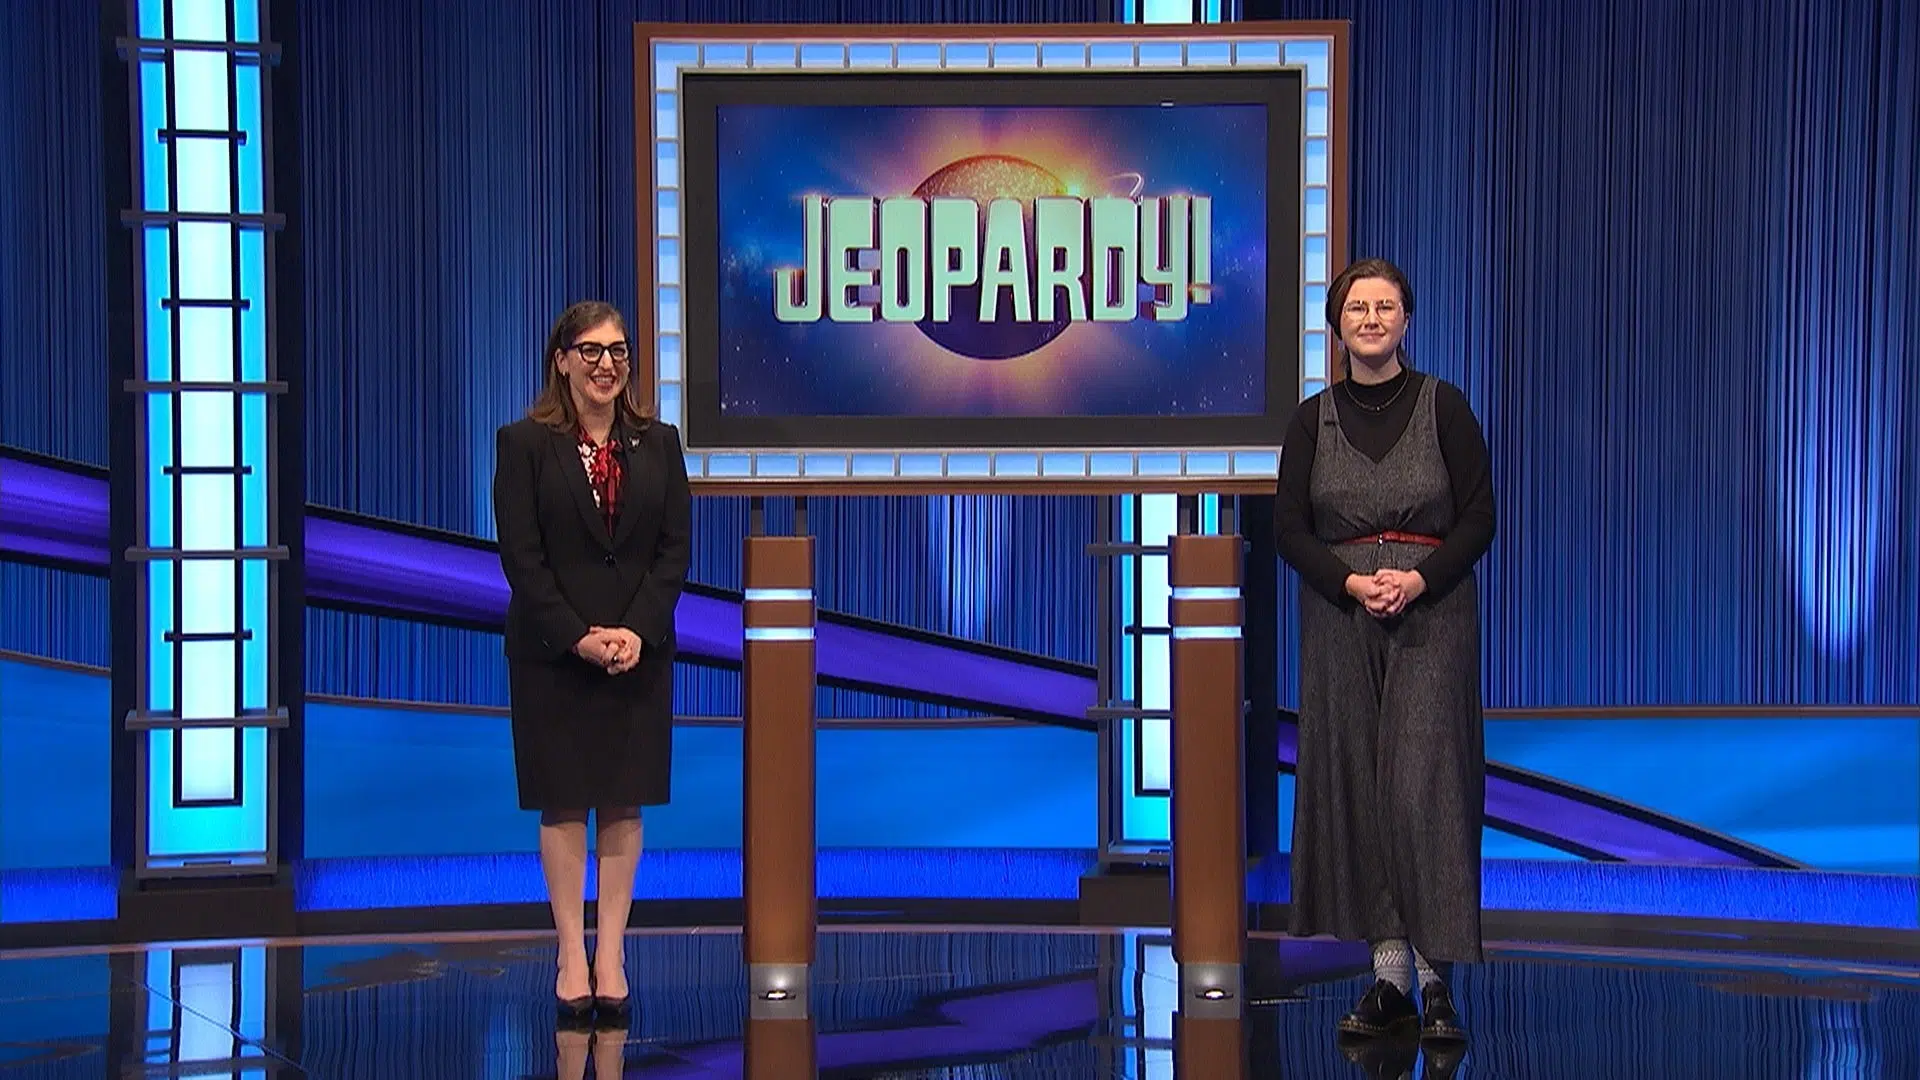 Third Jeopardy! win for Nova Scotia's Mattea Roach